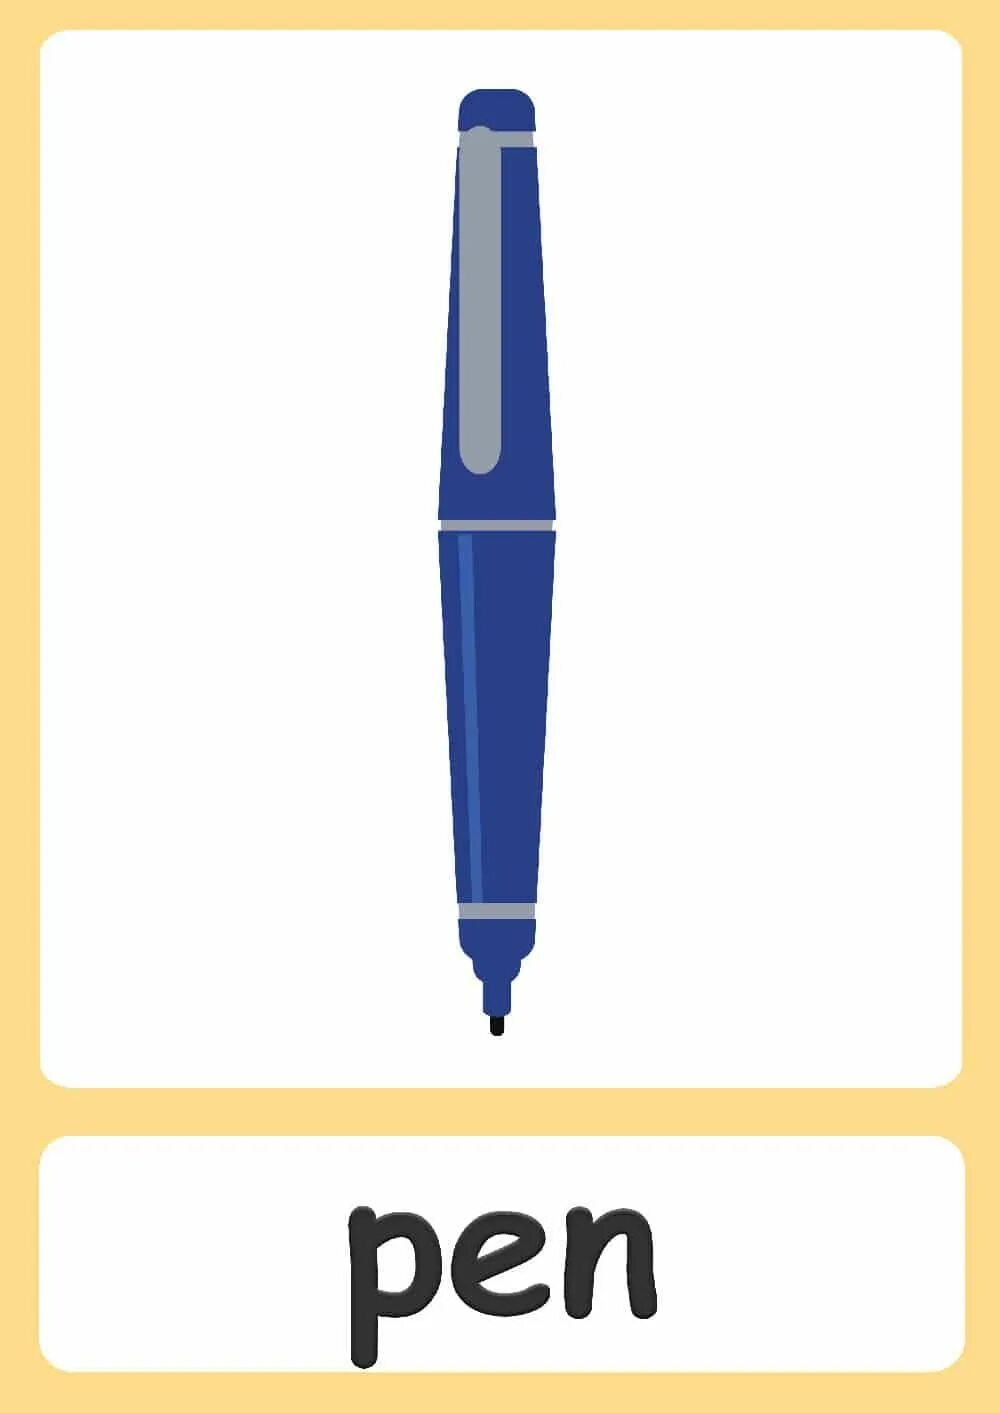 Pen по английски. Pen карточка. Pen картинка. Pen Flashcard for Kids. Blue Pen for Kids.